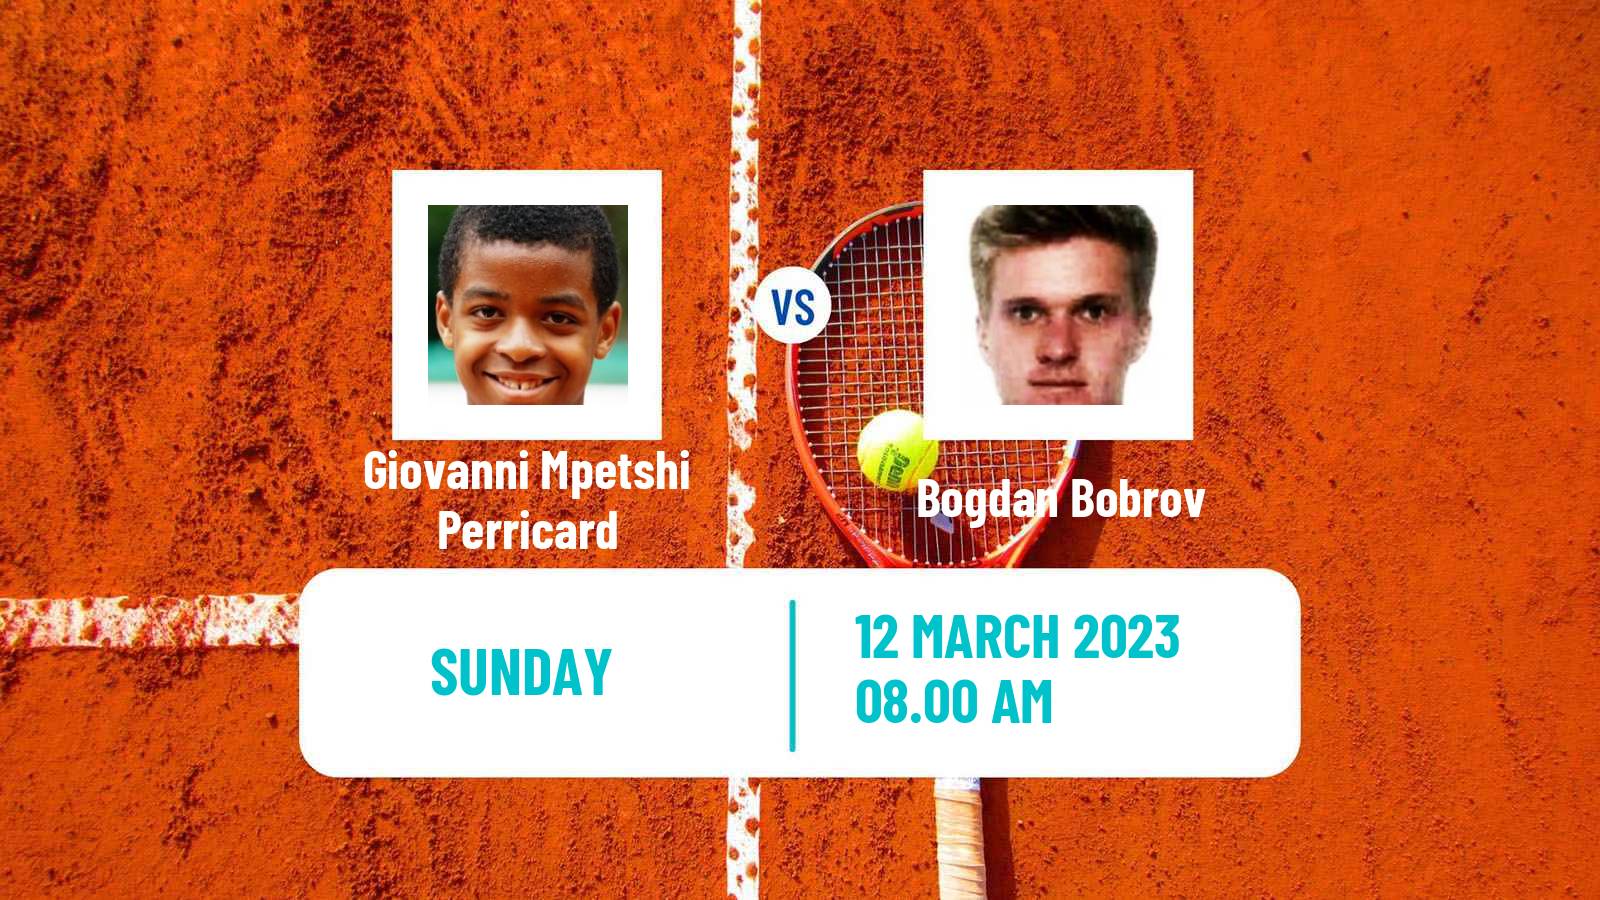 Tennis ATP Challenger Giovanni Mpetshi Perricard - Bogdan Bobrov